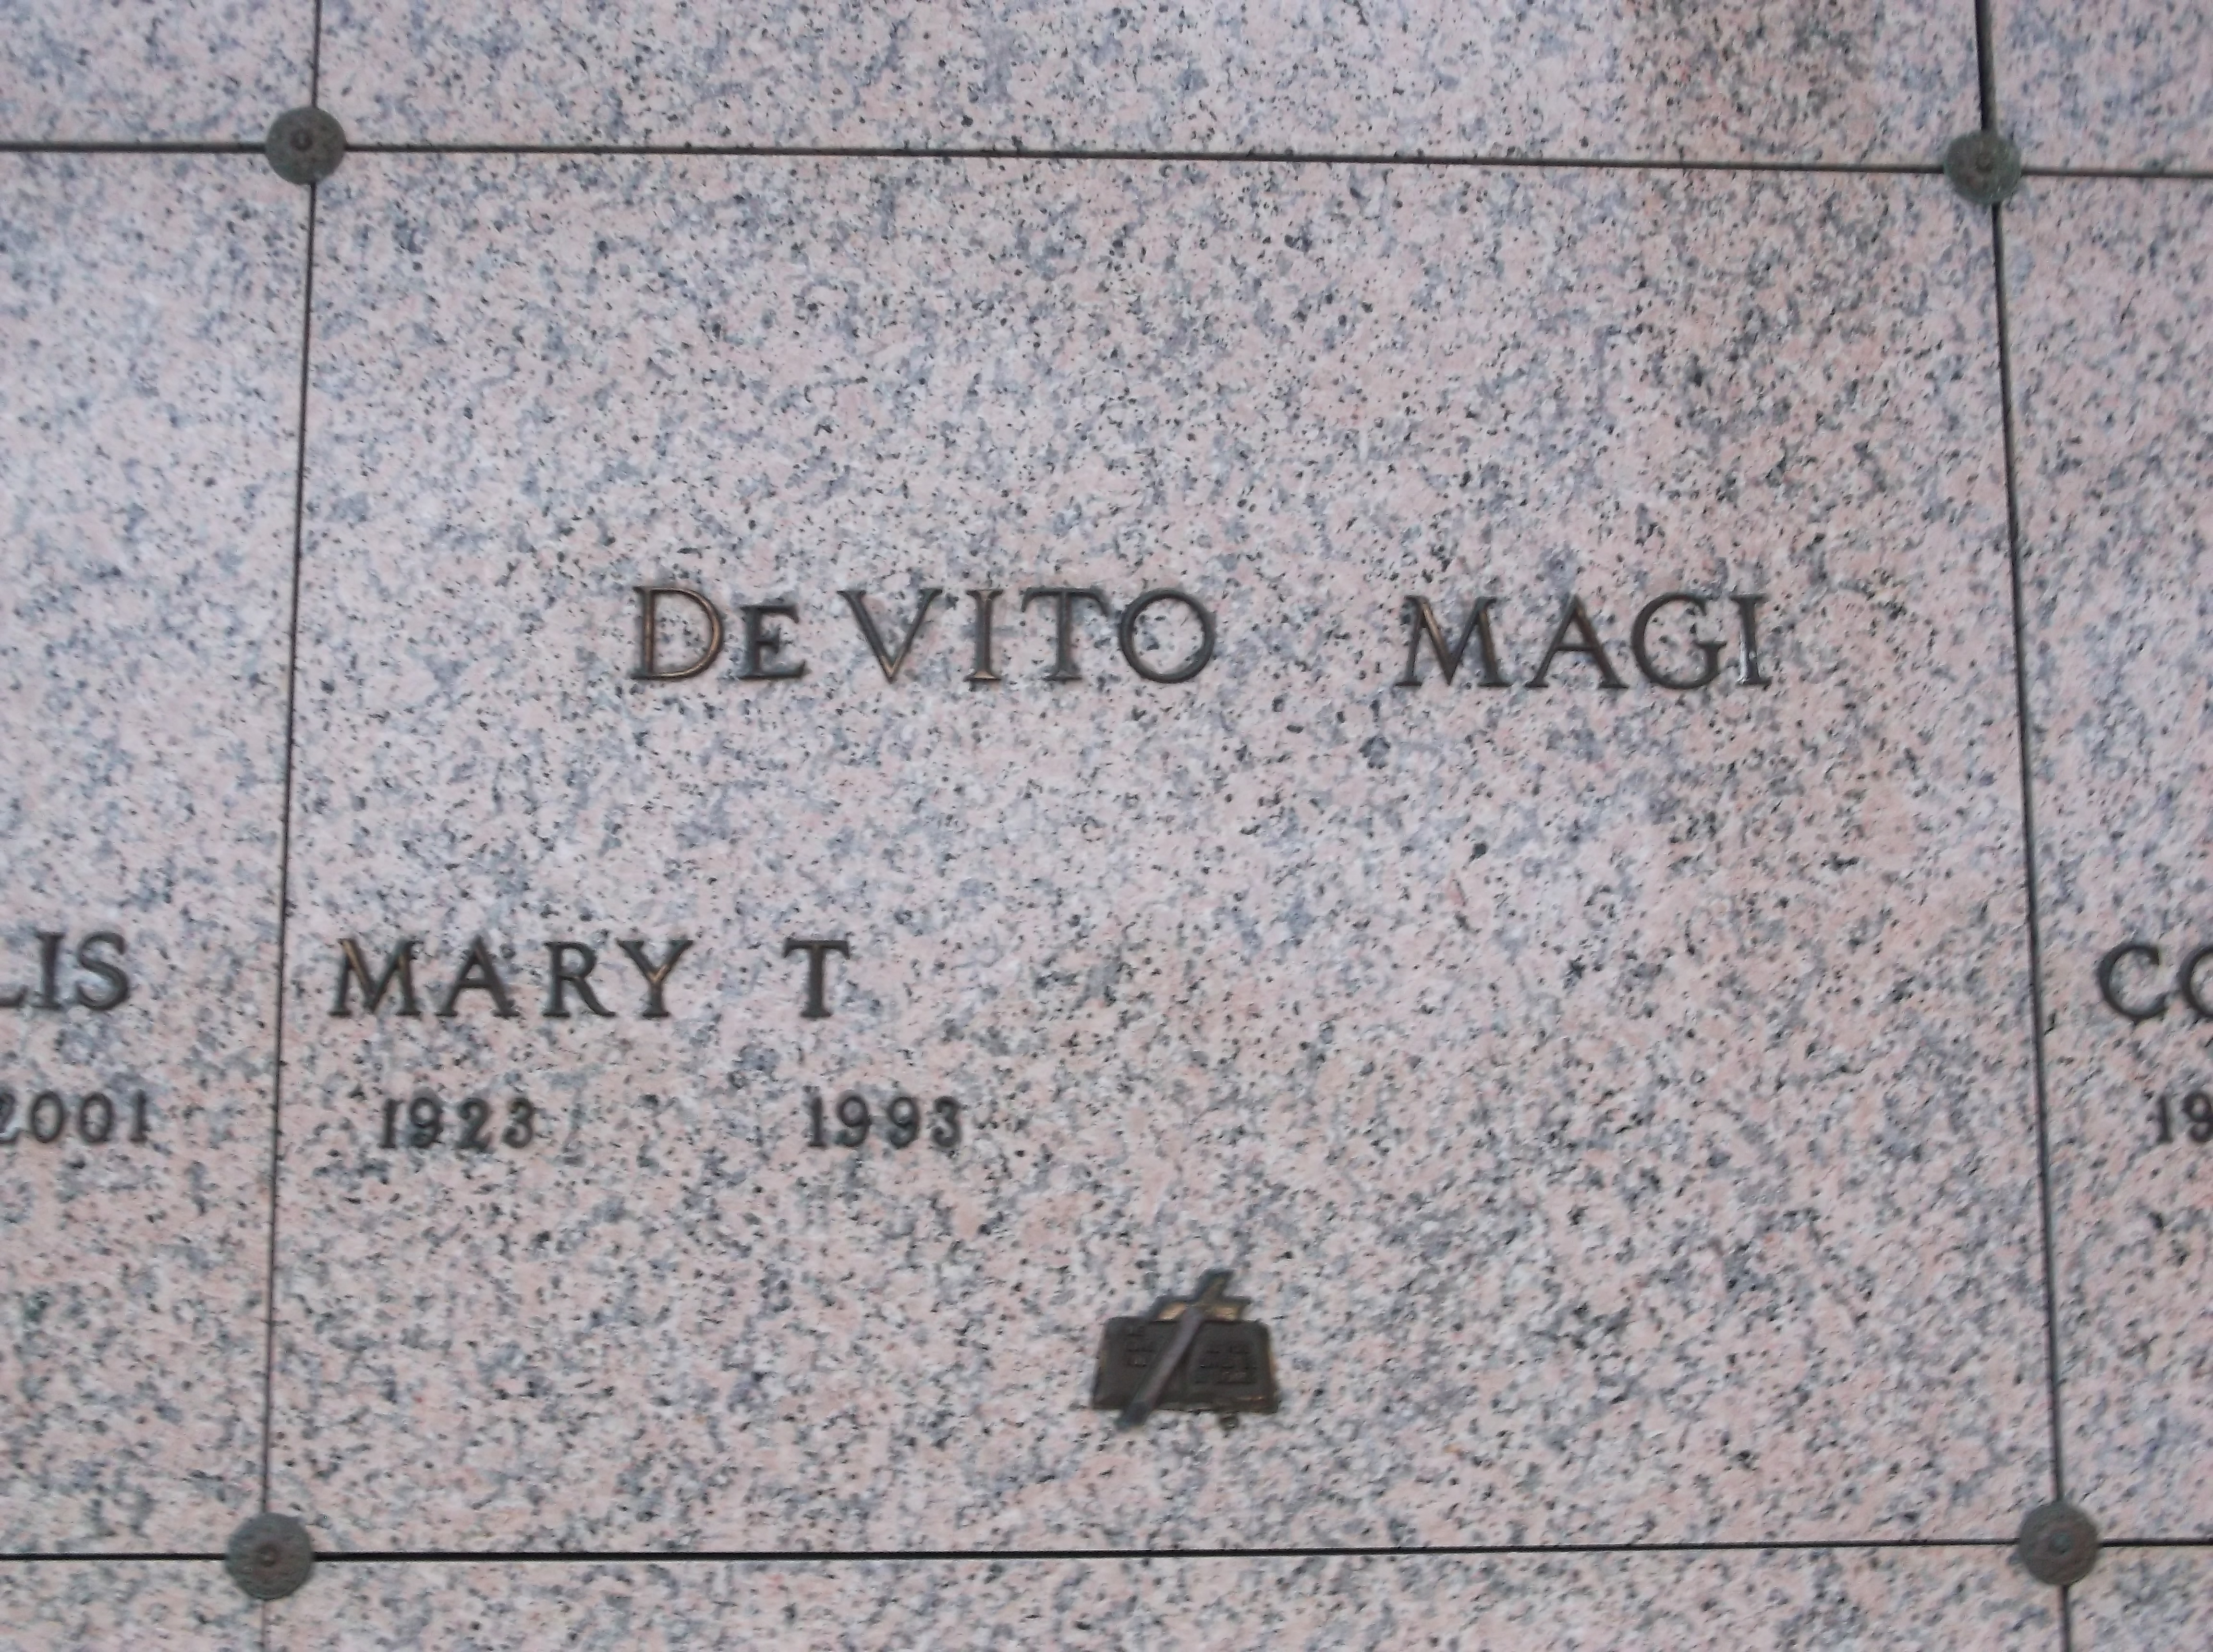 Mary T De Vito